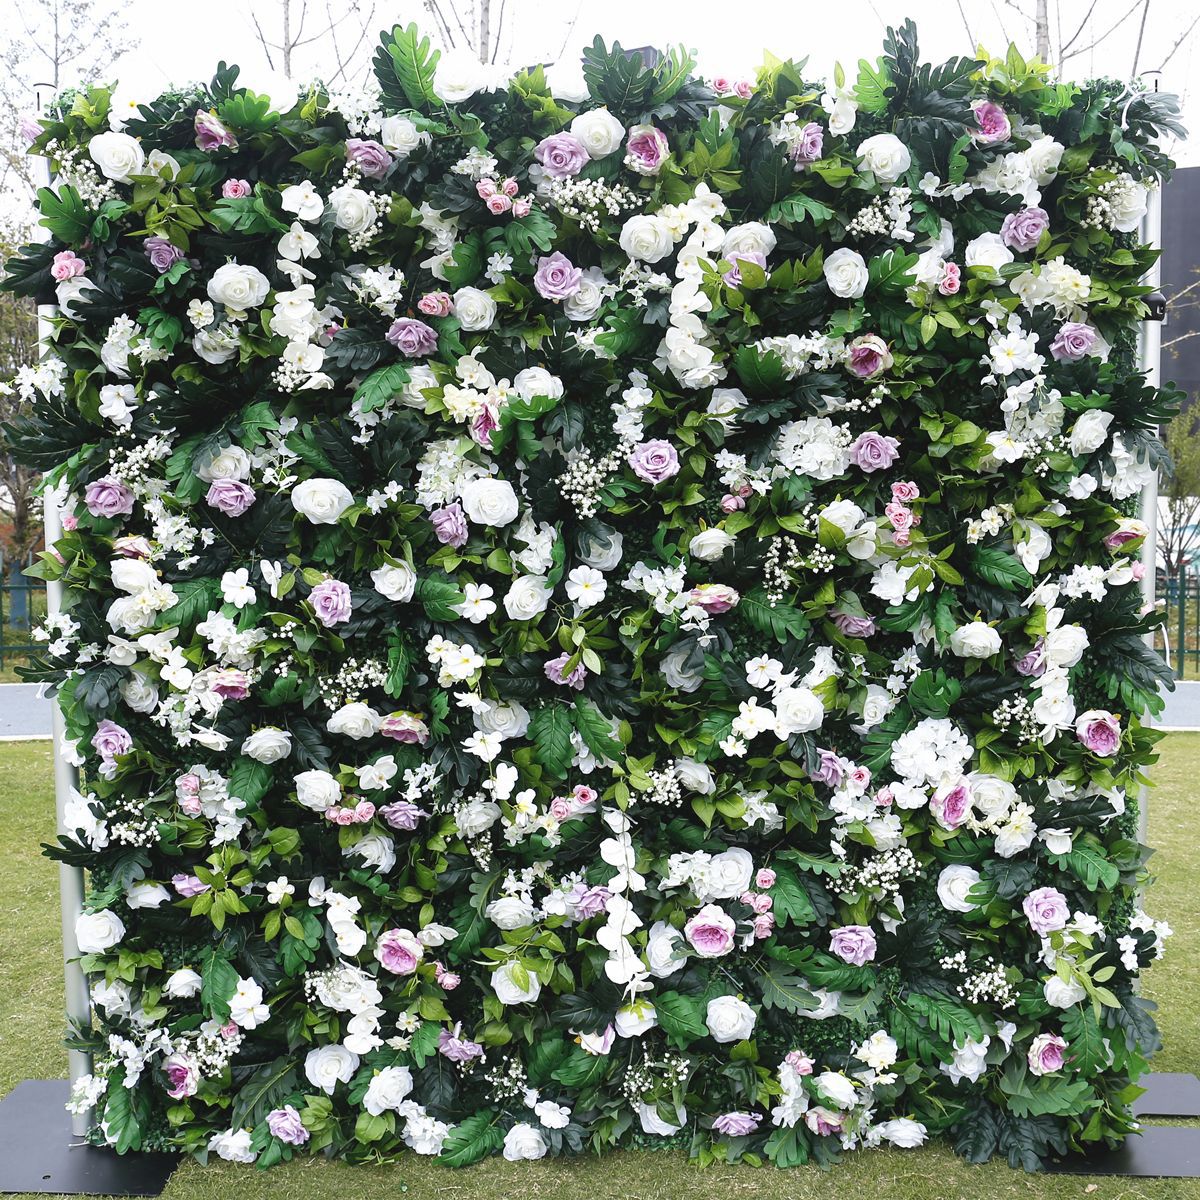 5D kain simulasi ngisor mawar tembok latar mburi wedding dekorasi ijo tanduran tembok tembok tanduran